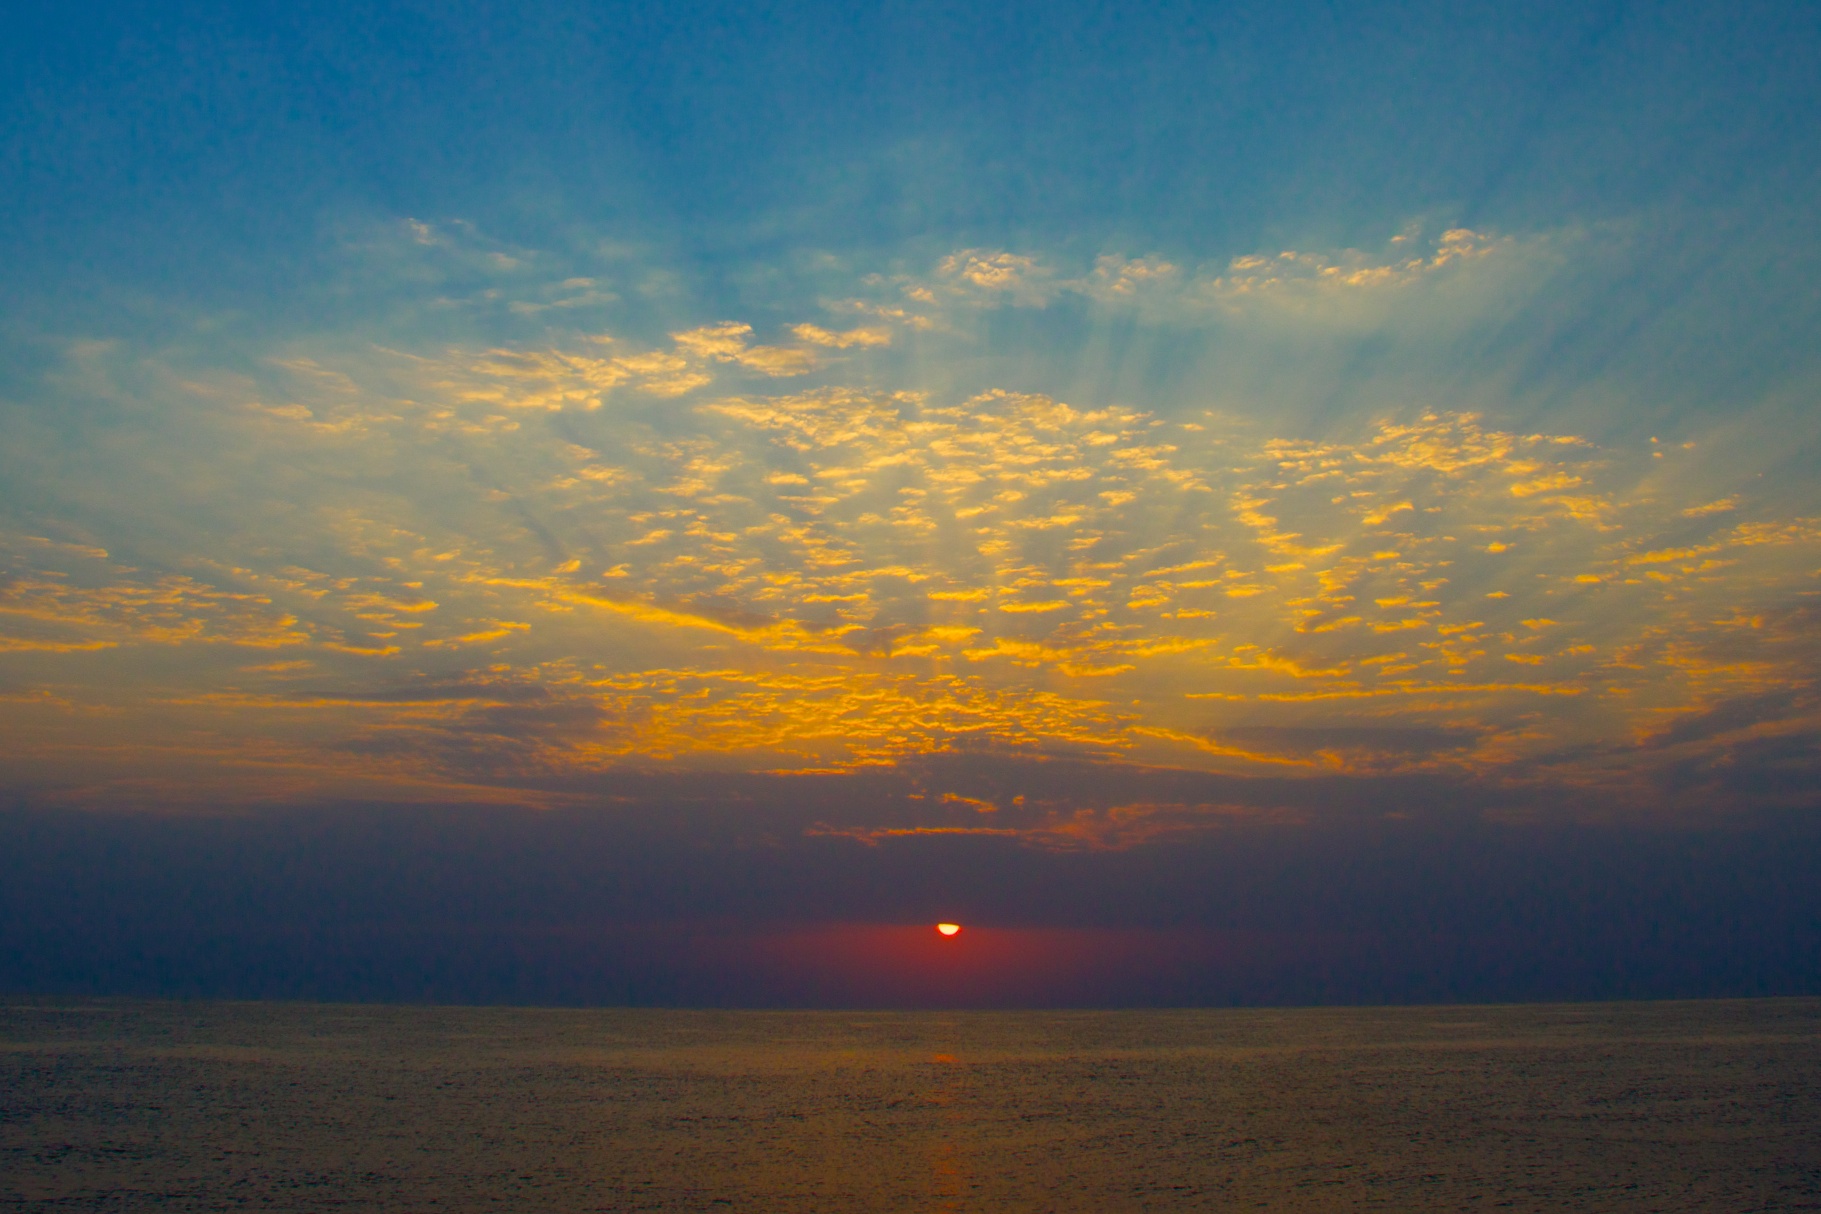 Sunrise on the Red Sea...